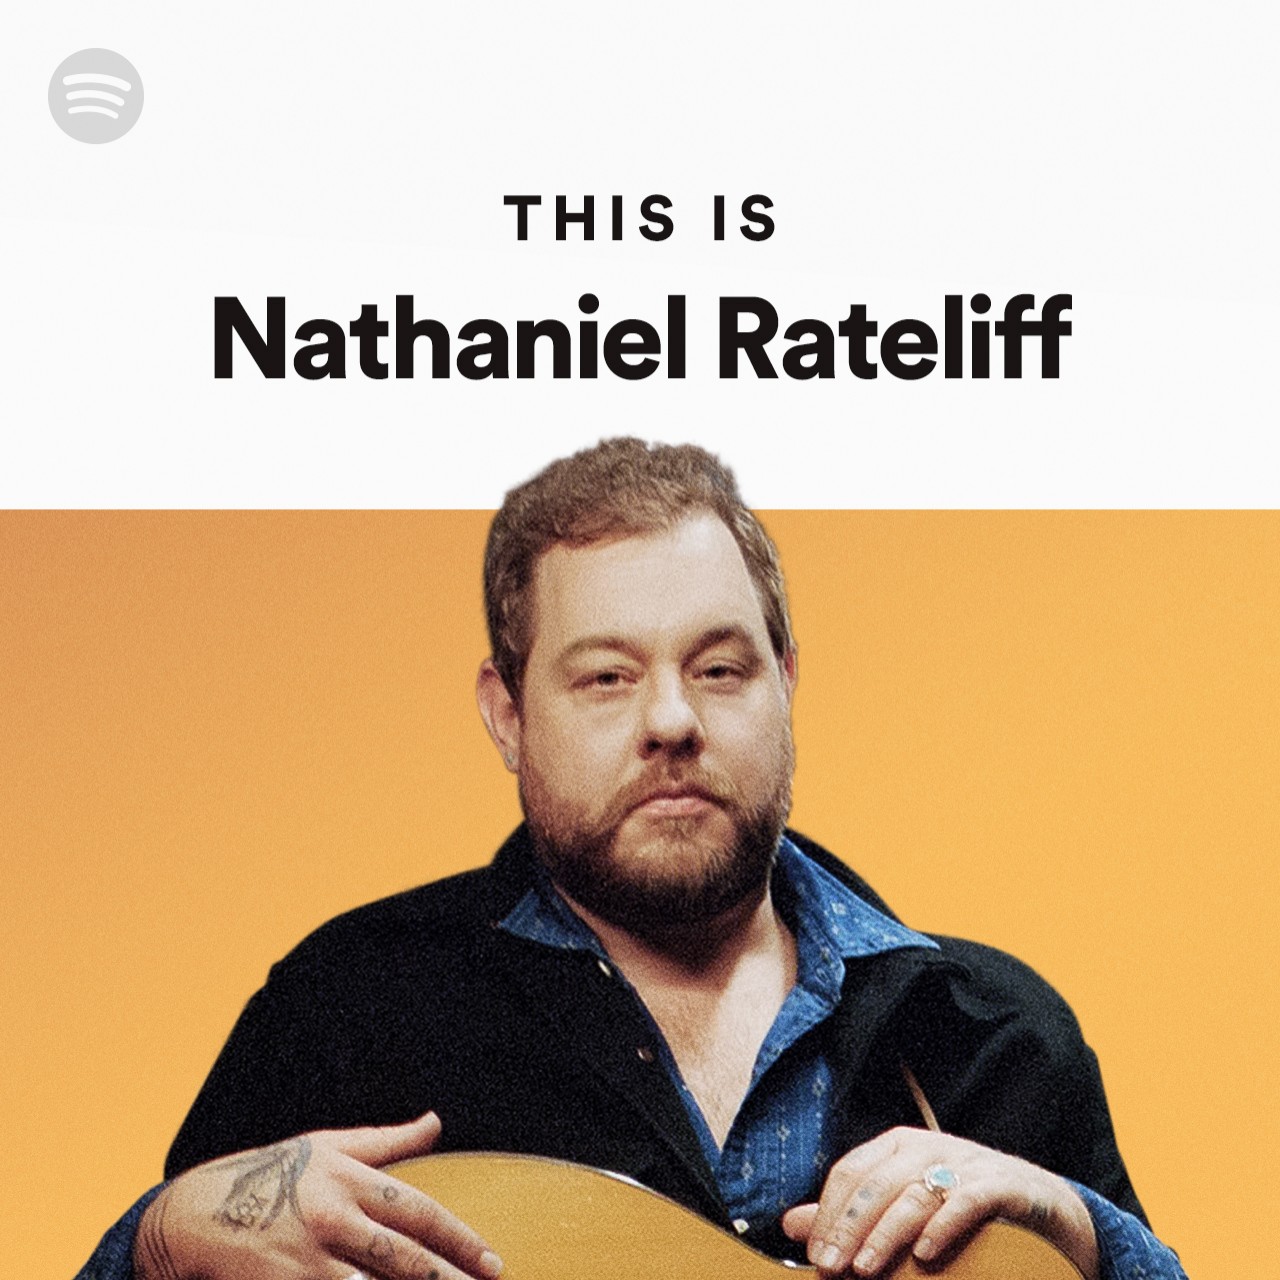 nathaniel rateliff albums